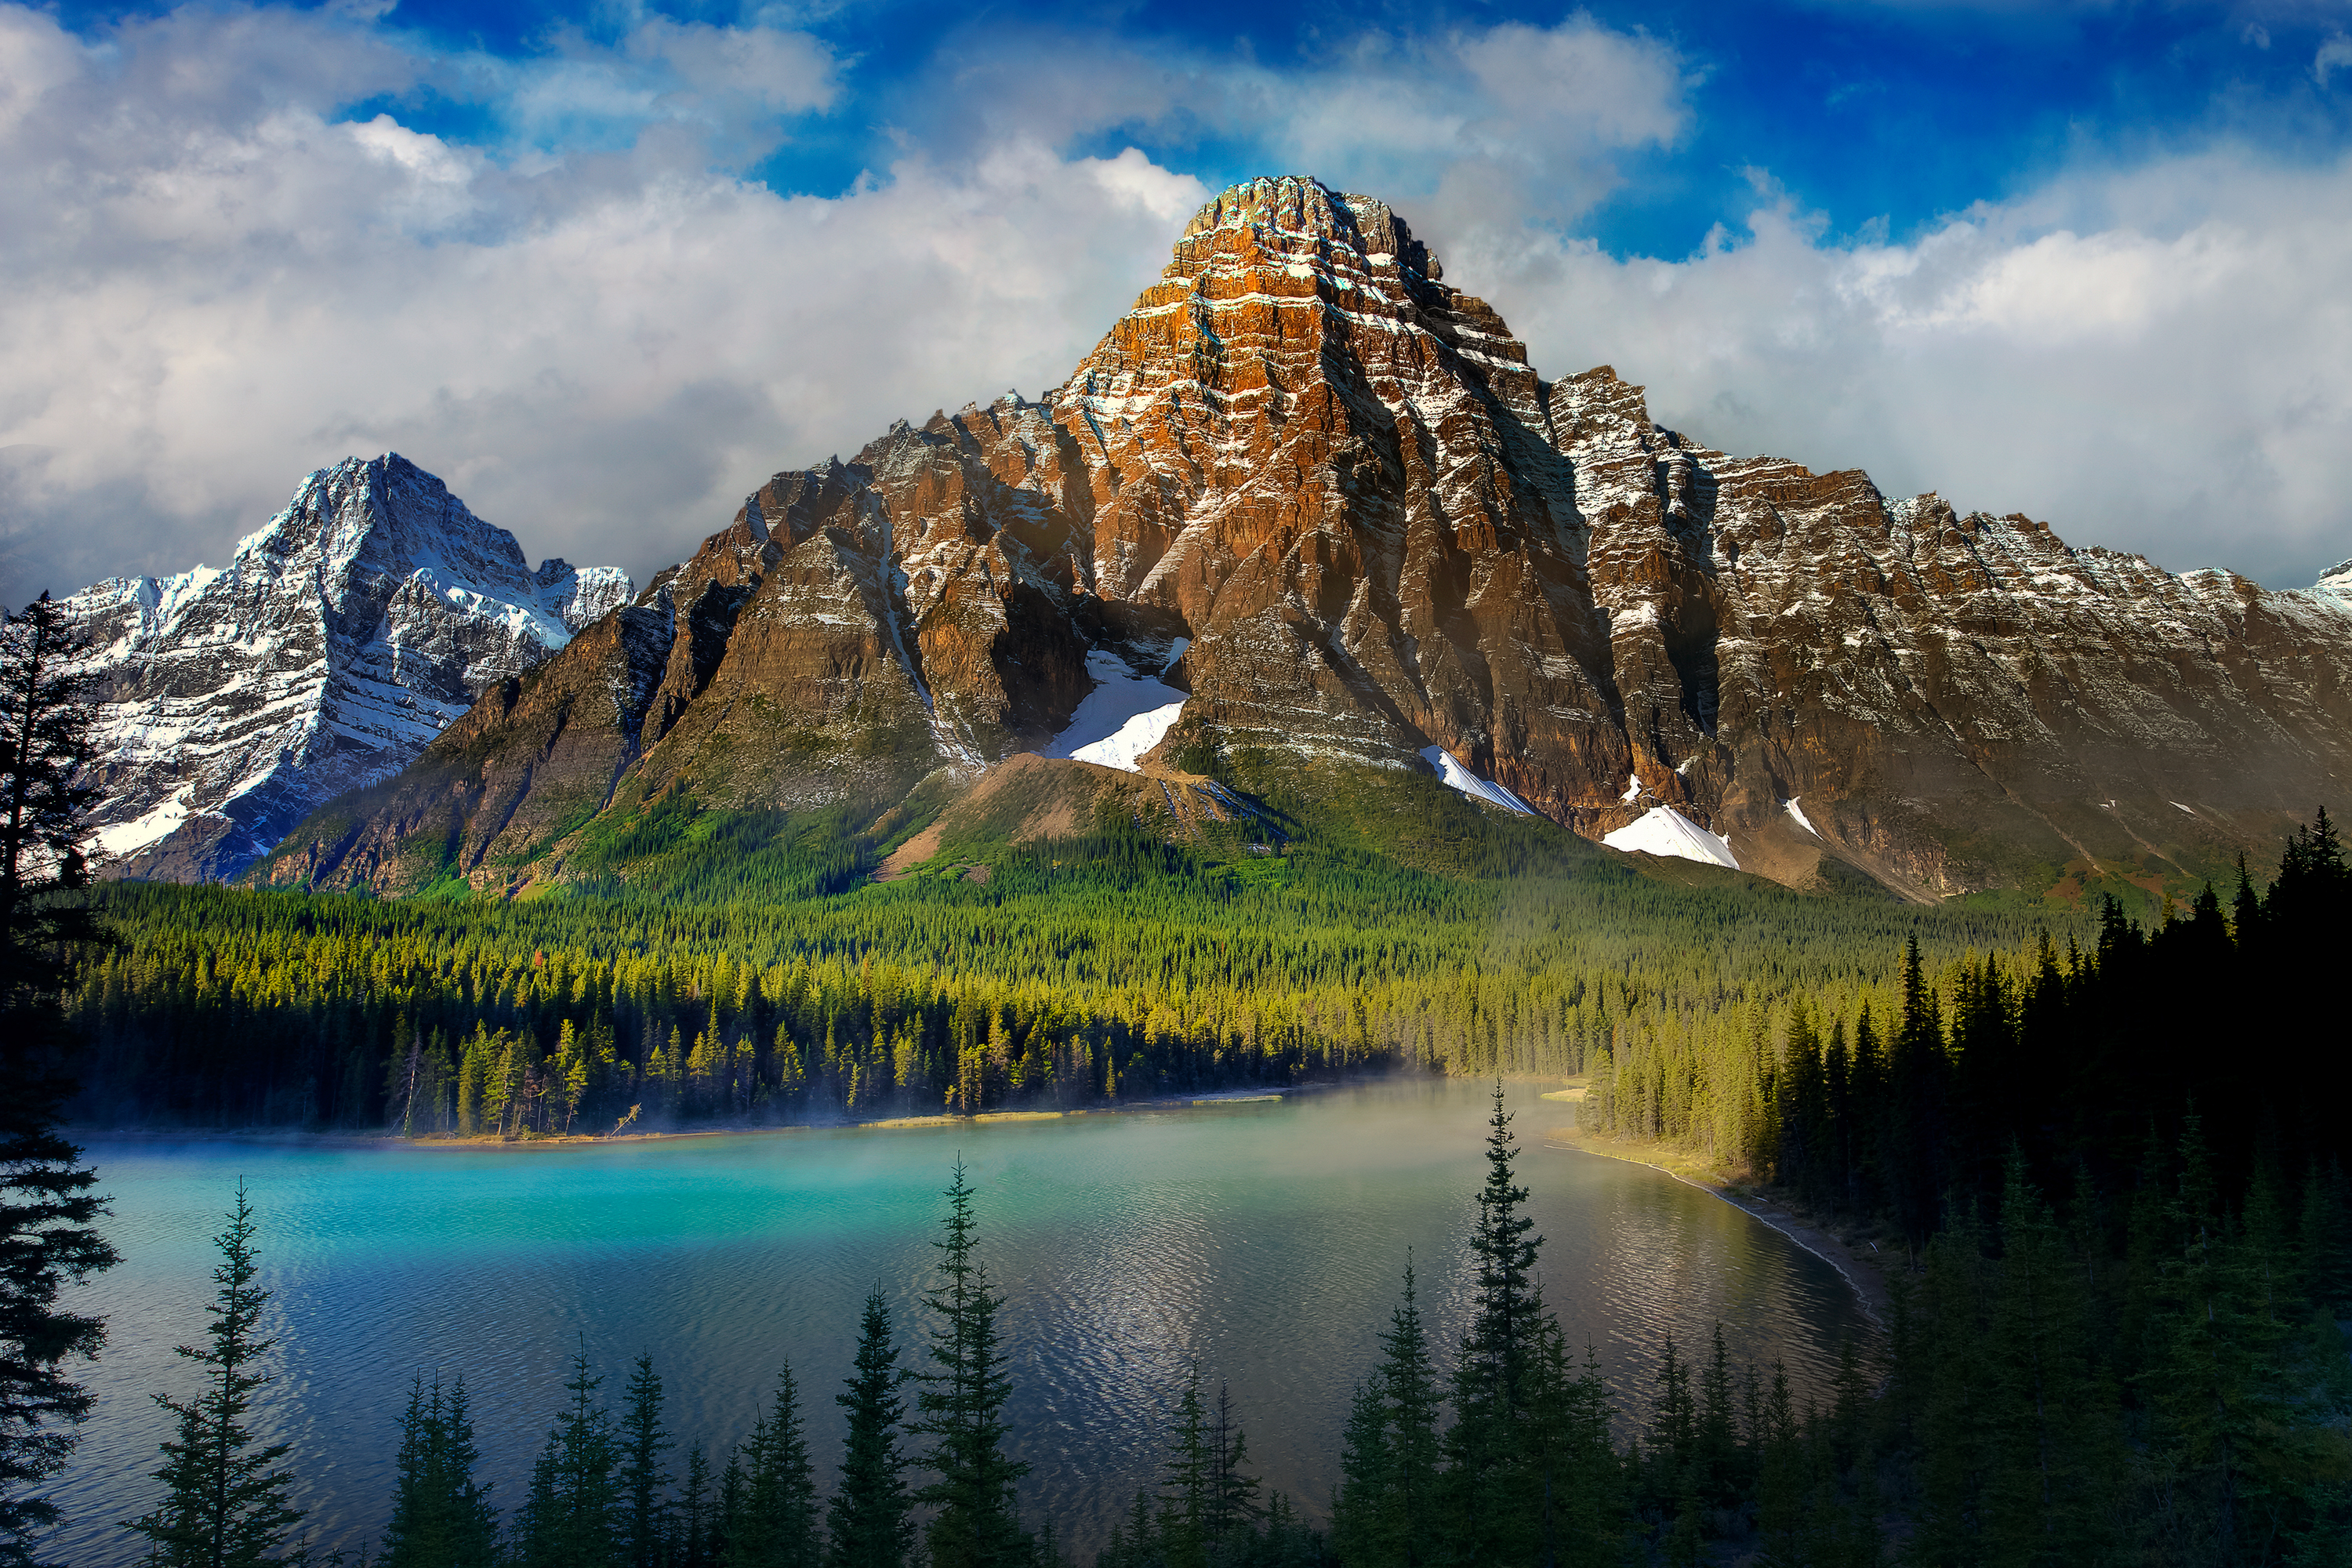 145707 descargar imagen naturaleza, montañas, lago, precioso paisaje, hermoso paisaje: fondos de pantalla y protectores de pantalla gratis